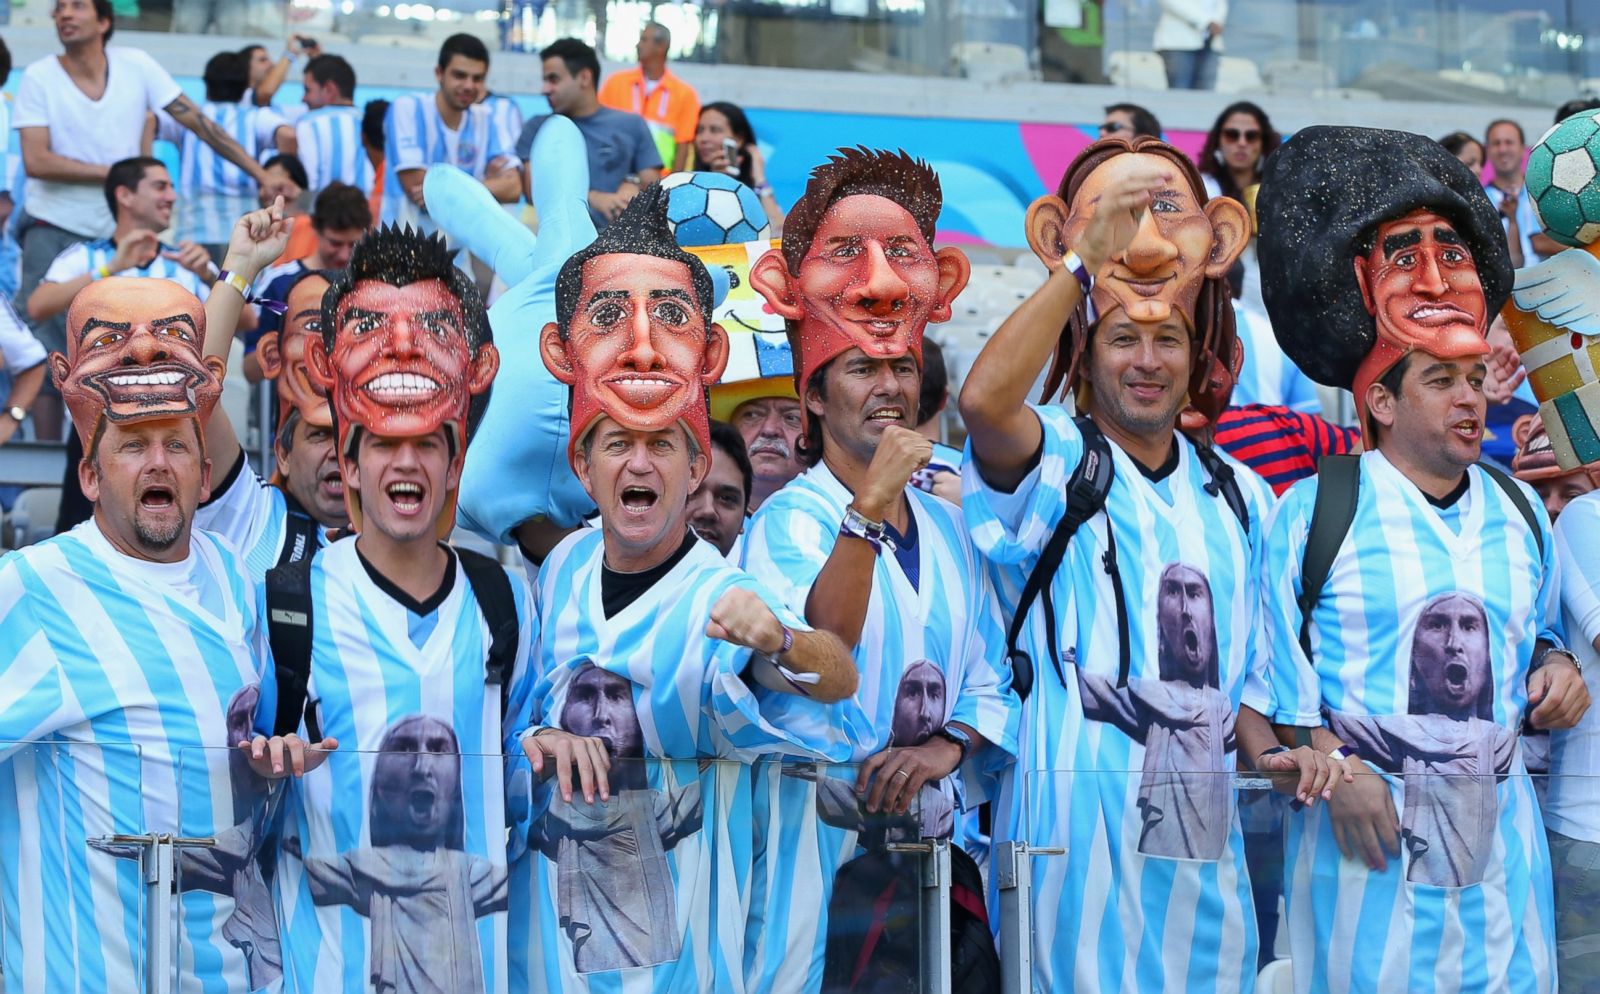 The Craziest World Cup Fans Photos | Image #151 - ABC News